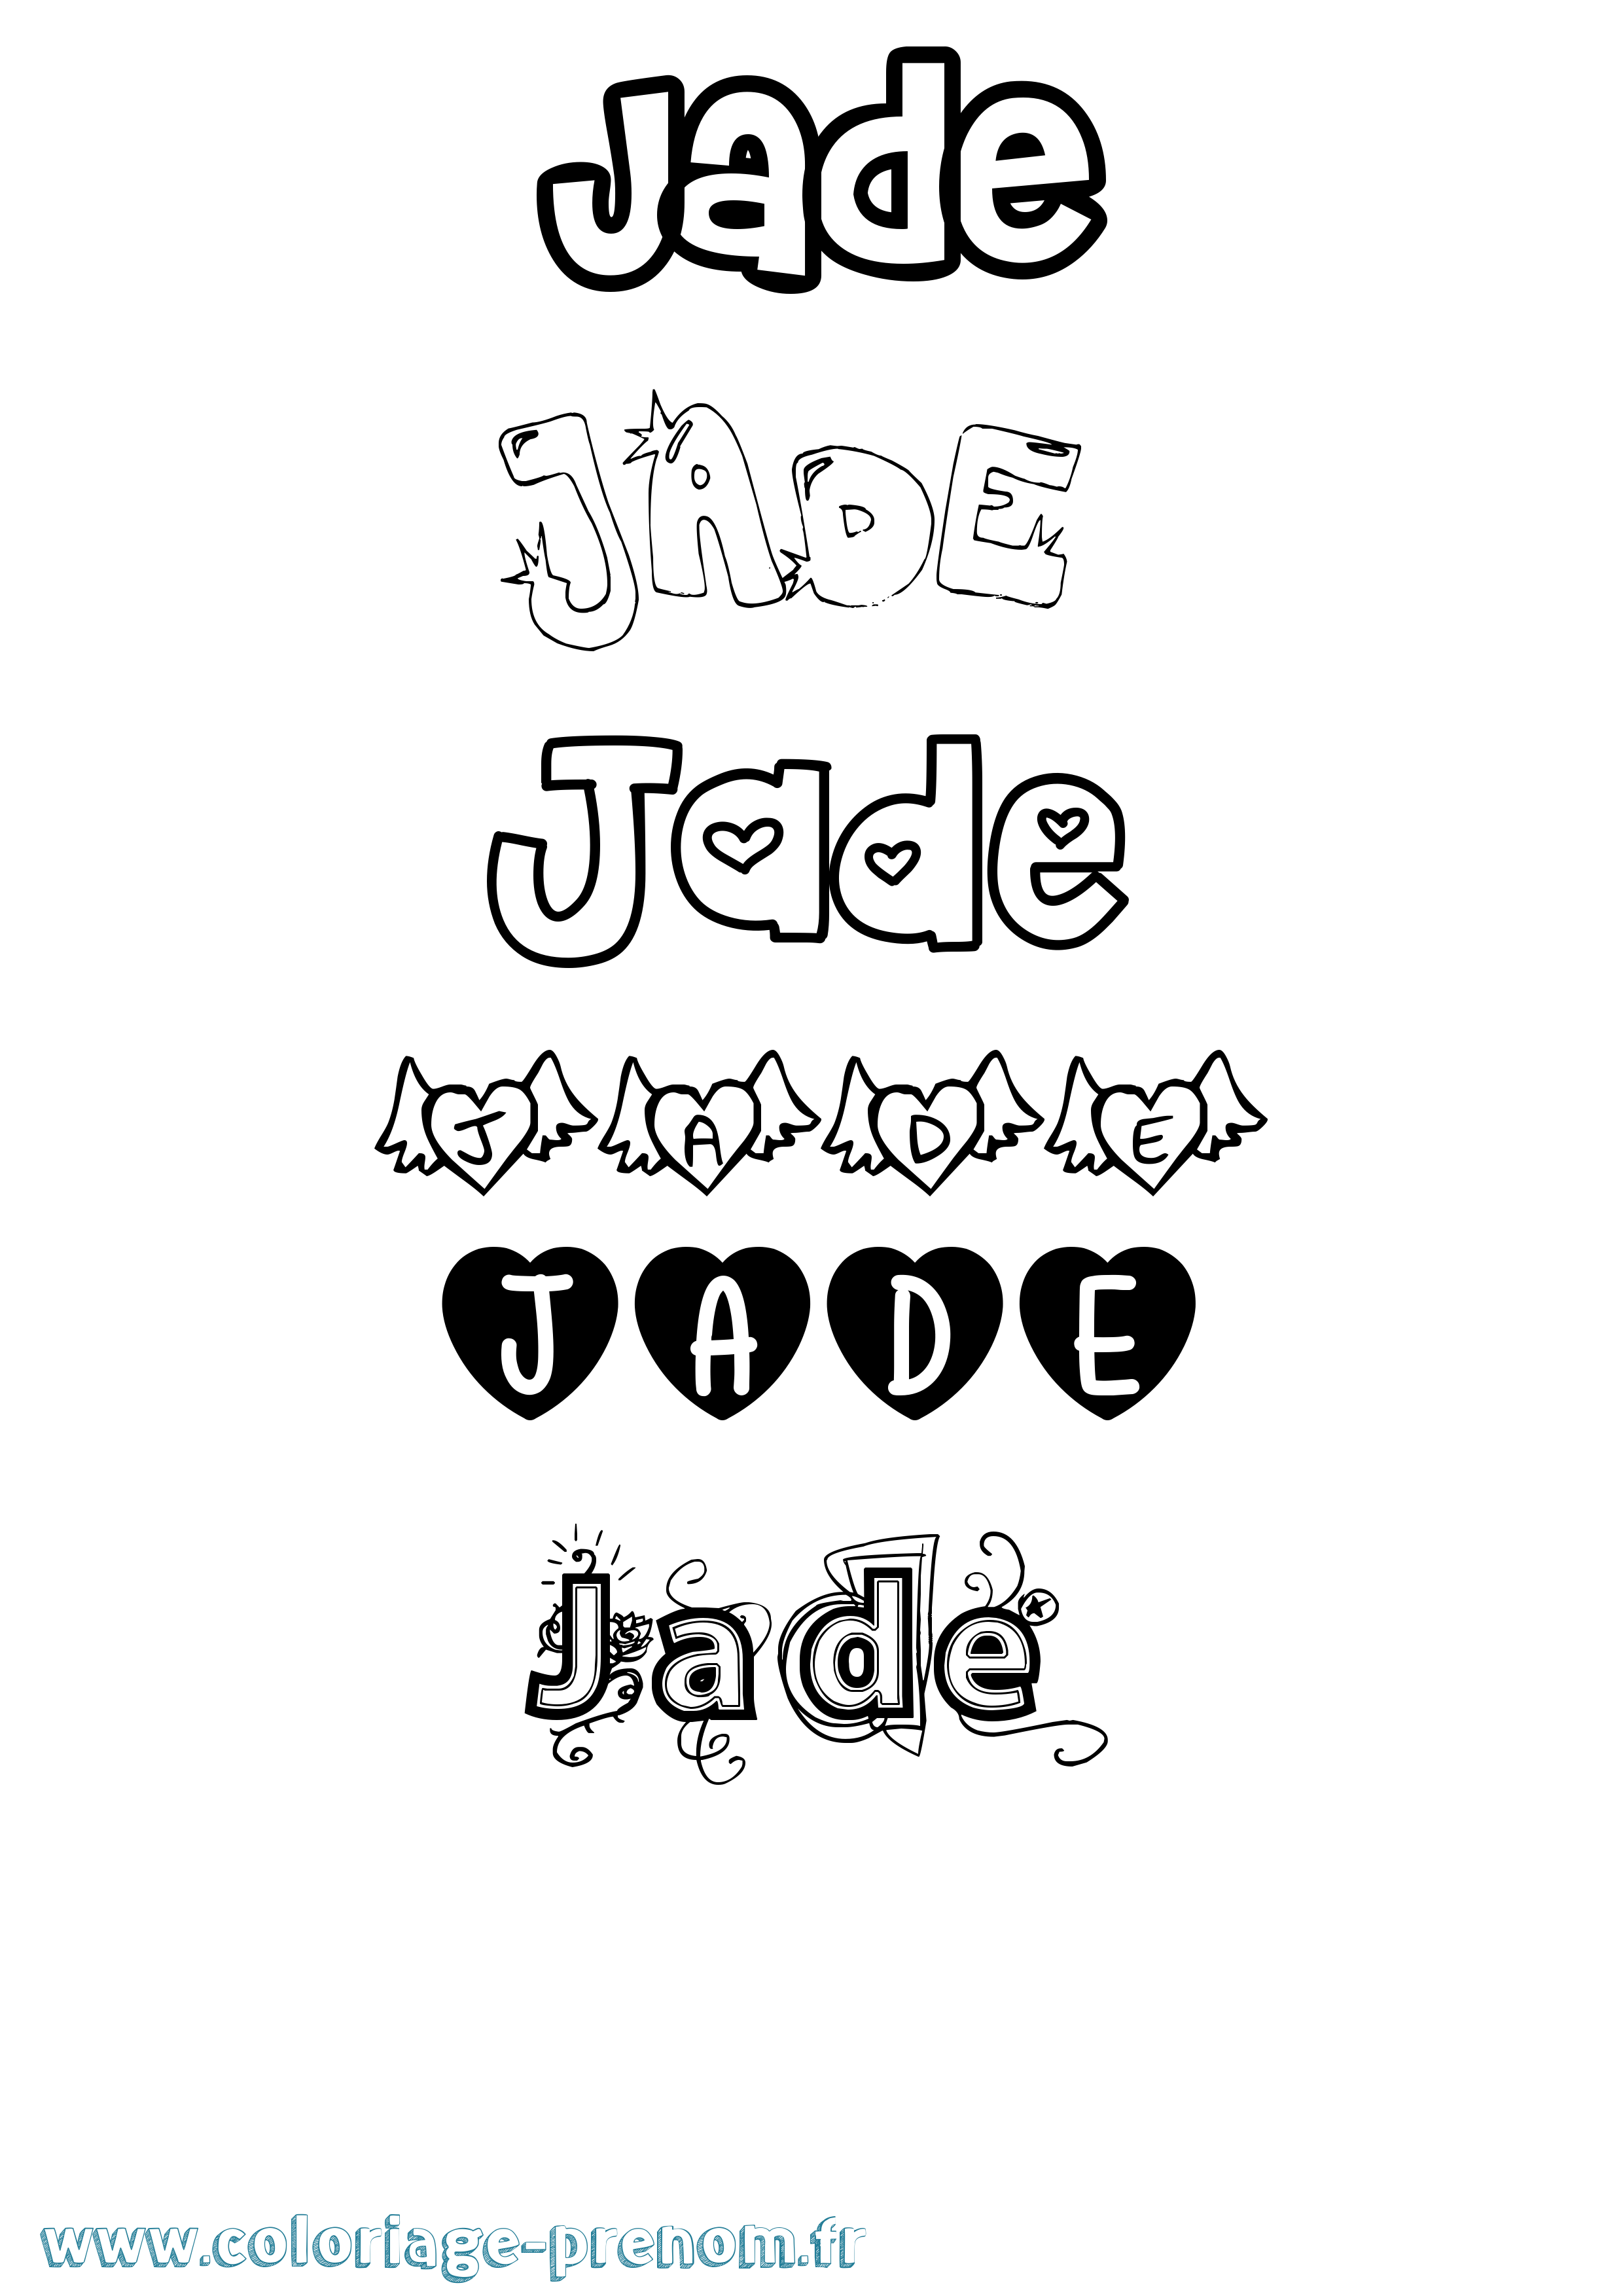 Coloriage prénom Jade